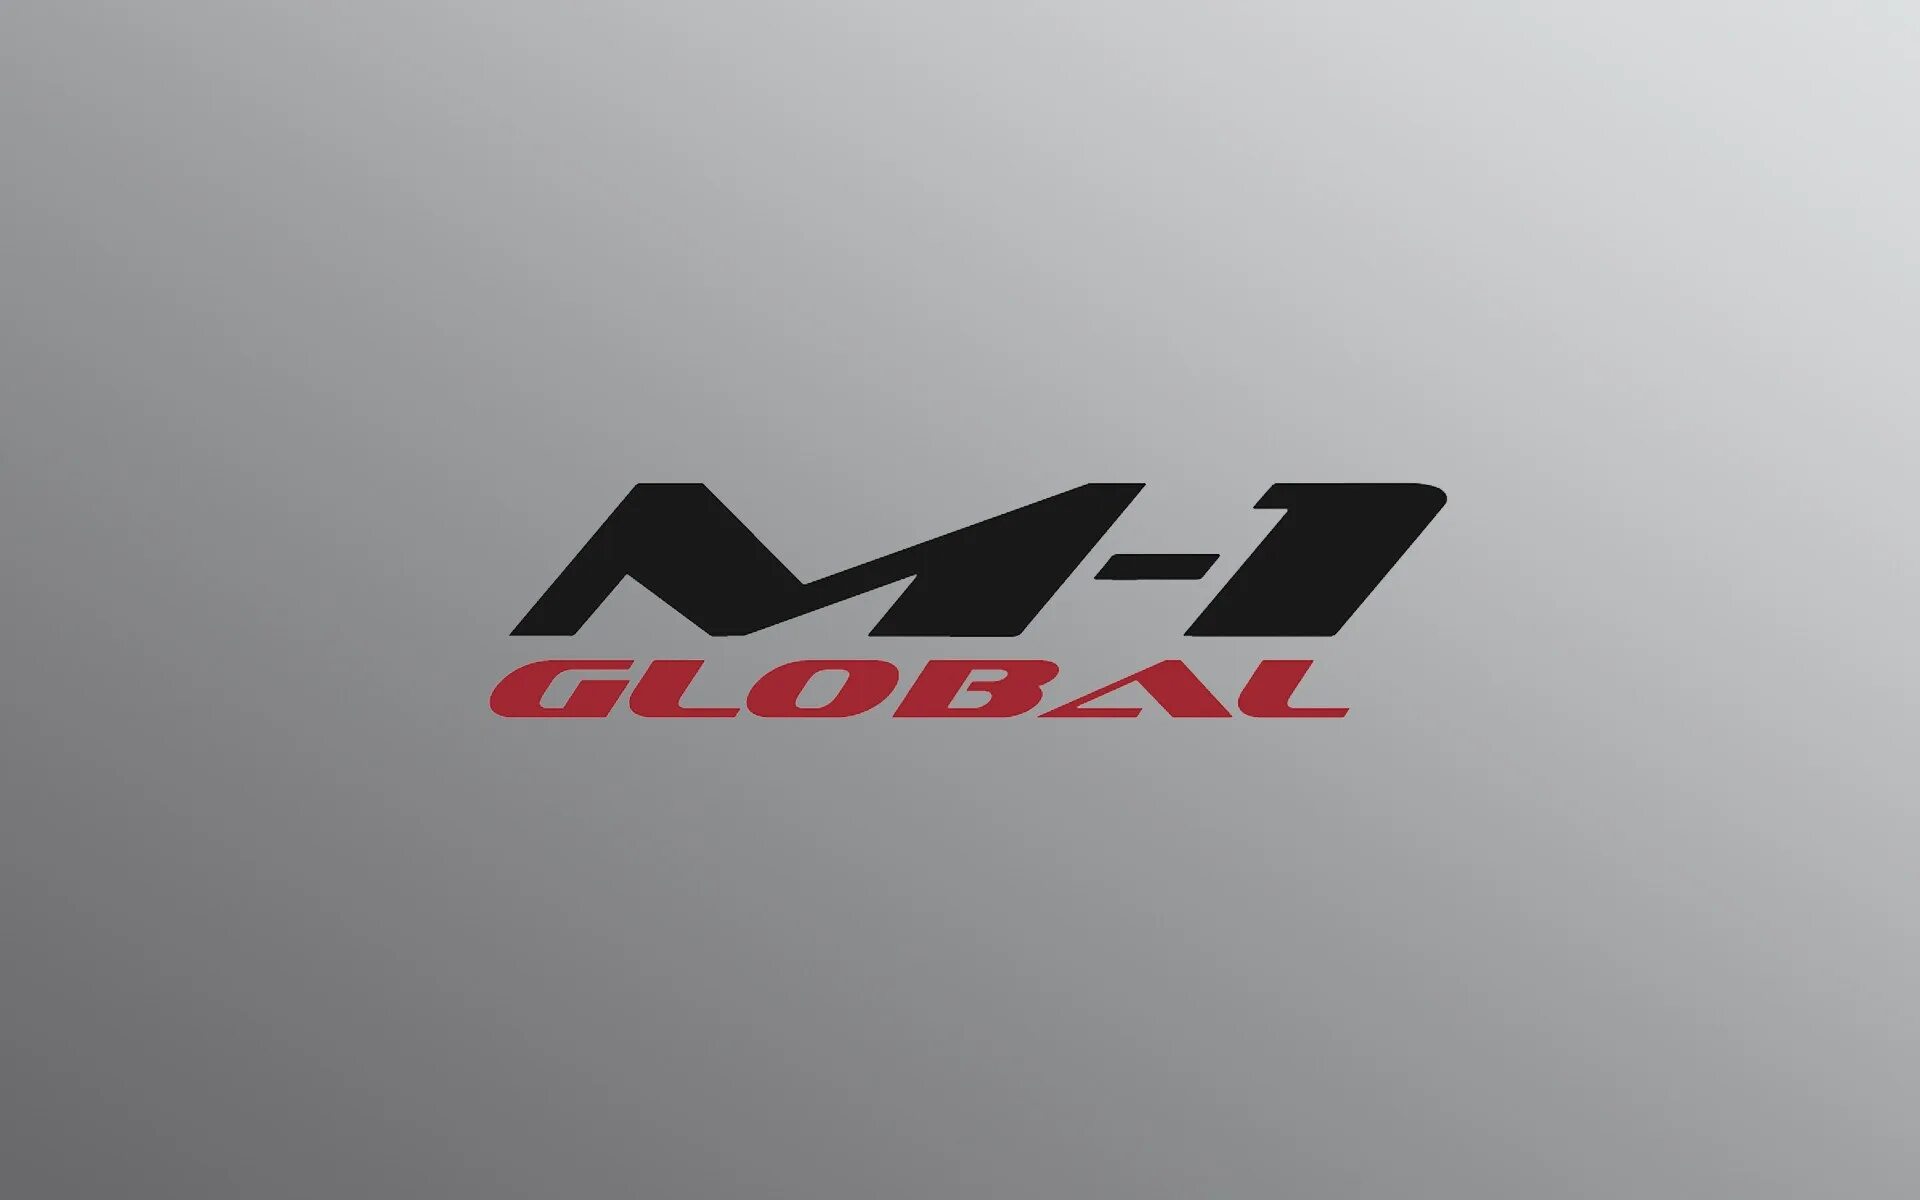 MMA m1. M1 логотип. М1. М1 Глобал. First global